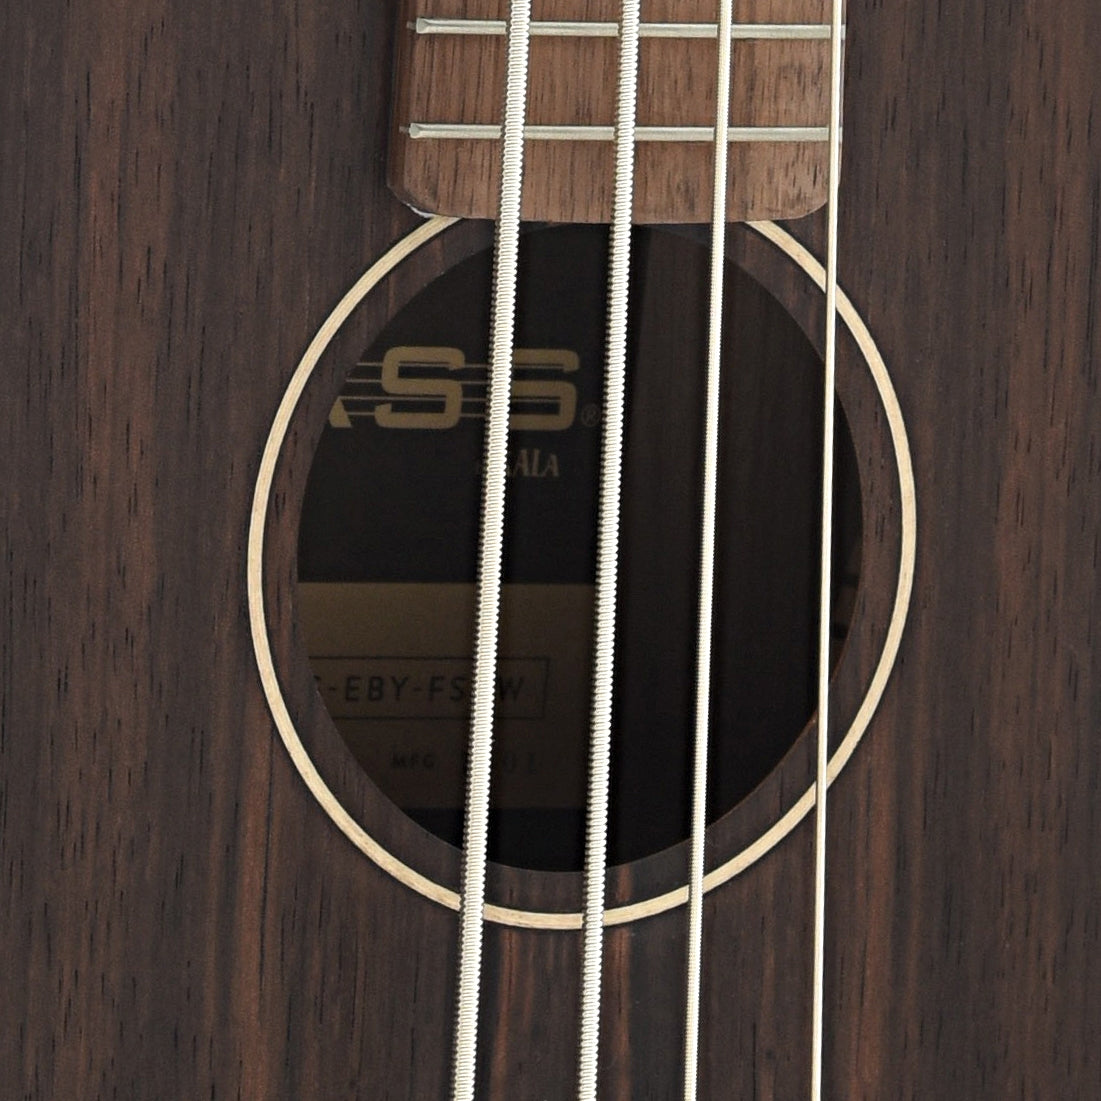 Image 4 of Kala U-Bass Striped Ebony Fretted Mini-Bass, Roundwound Strings, & Gigbag - SKU# UBEBRW : Product Type Acoustic Bass Guitars : Elderly Instruments